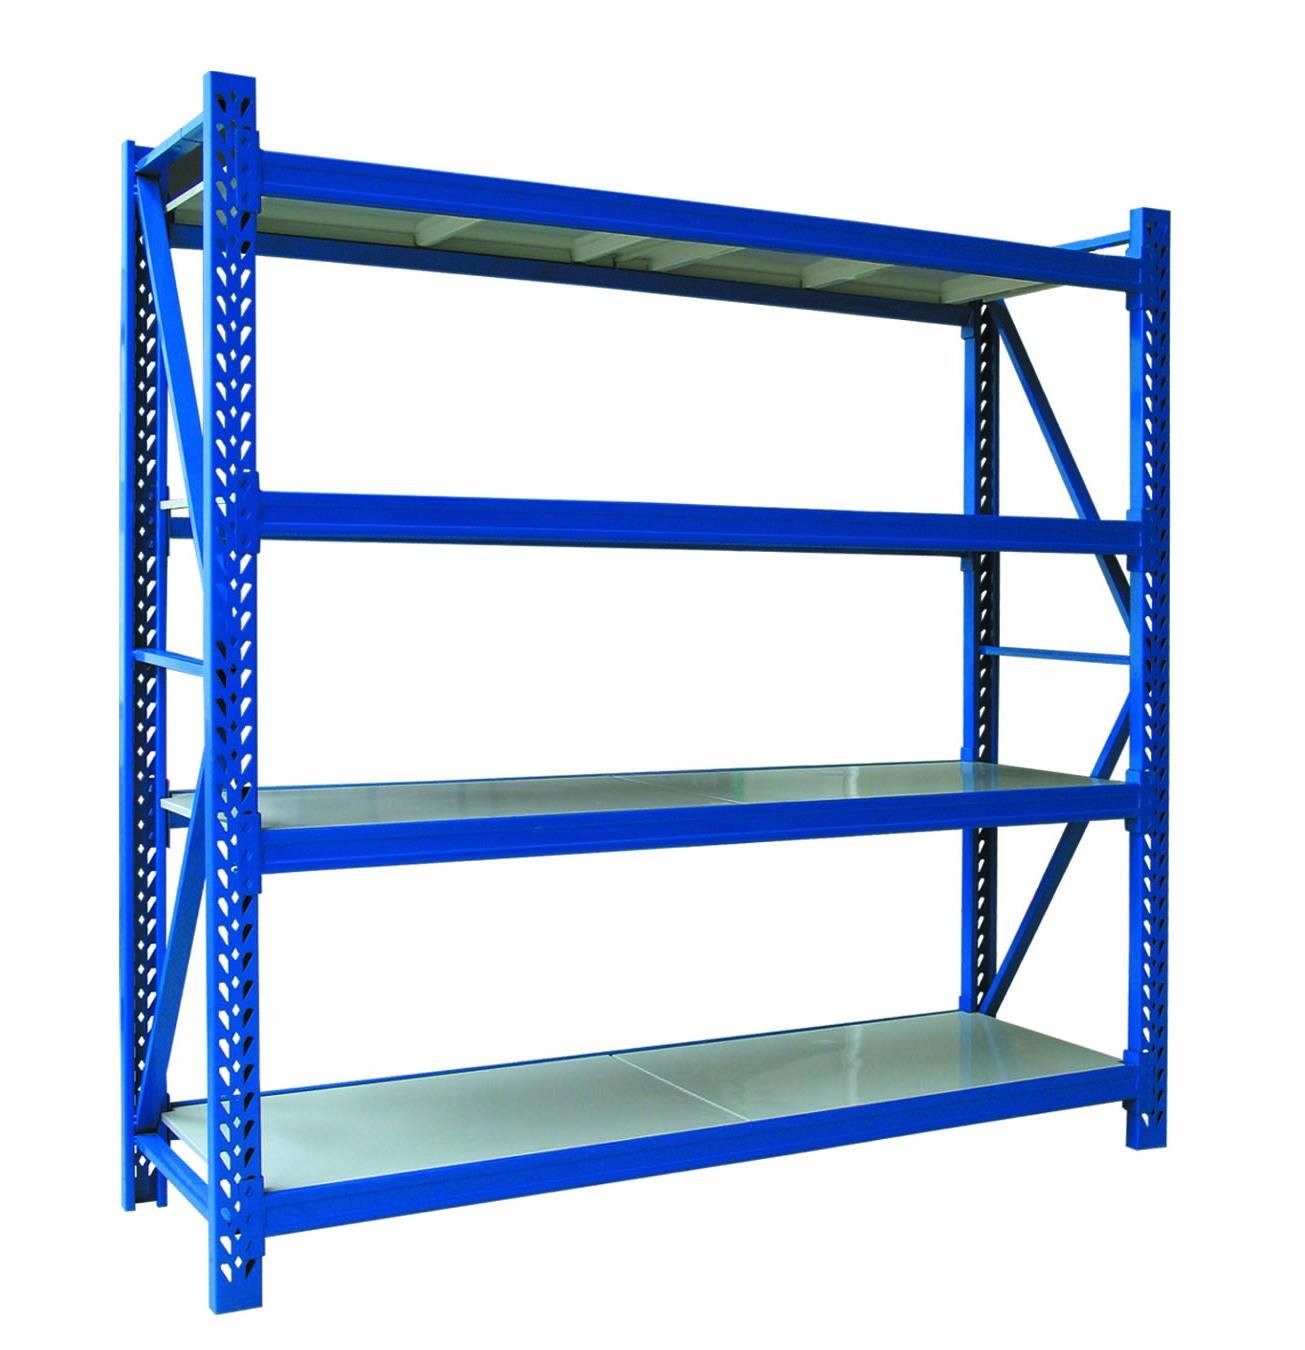 Flexible Metal Warehouse Shelving / Industrial Storage Racks Heavy Duty